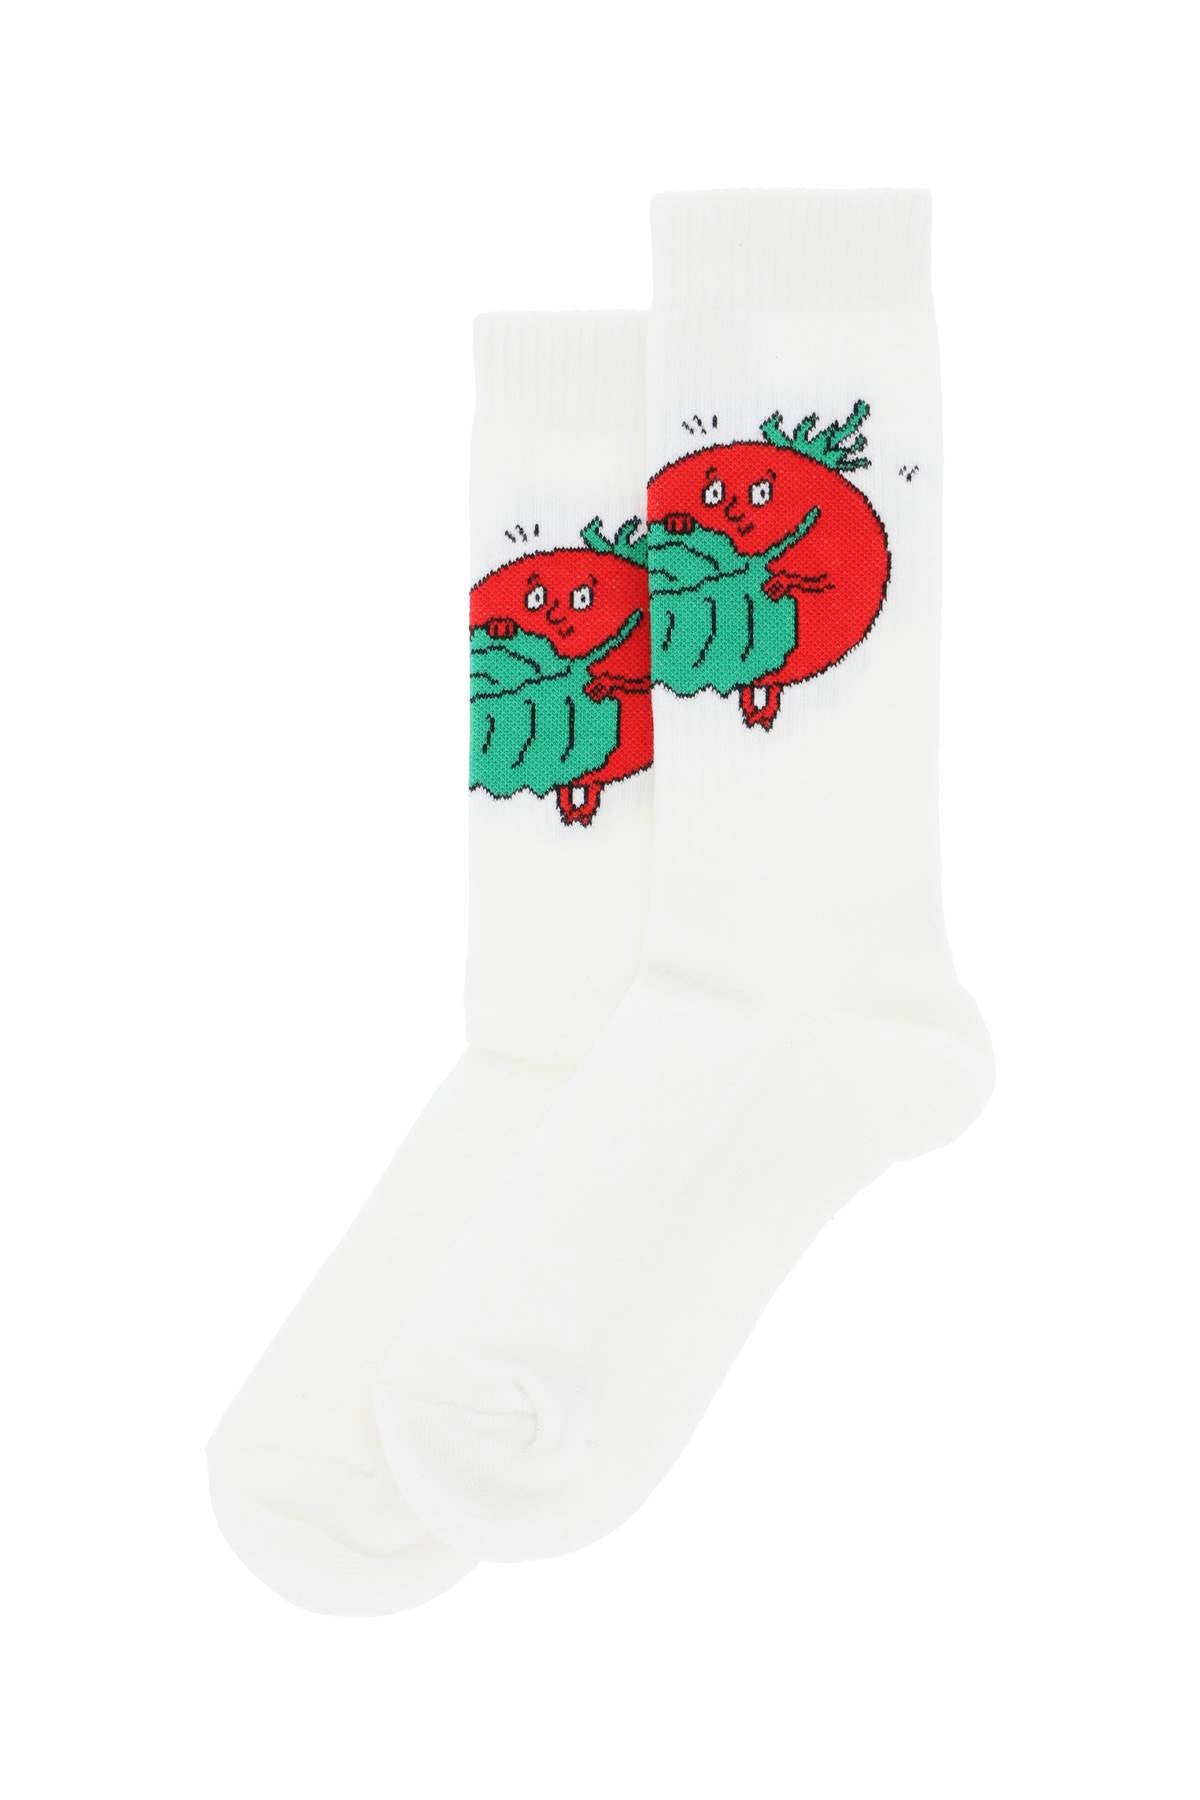 Sky high farm happy tomatoes crew socks-1